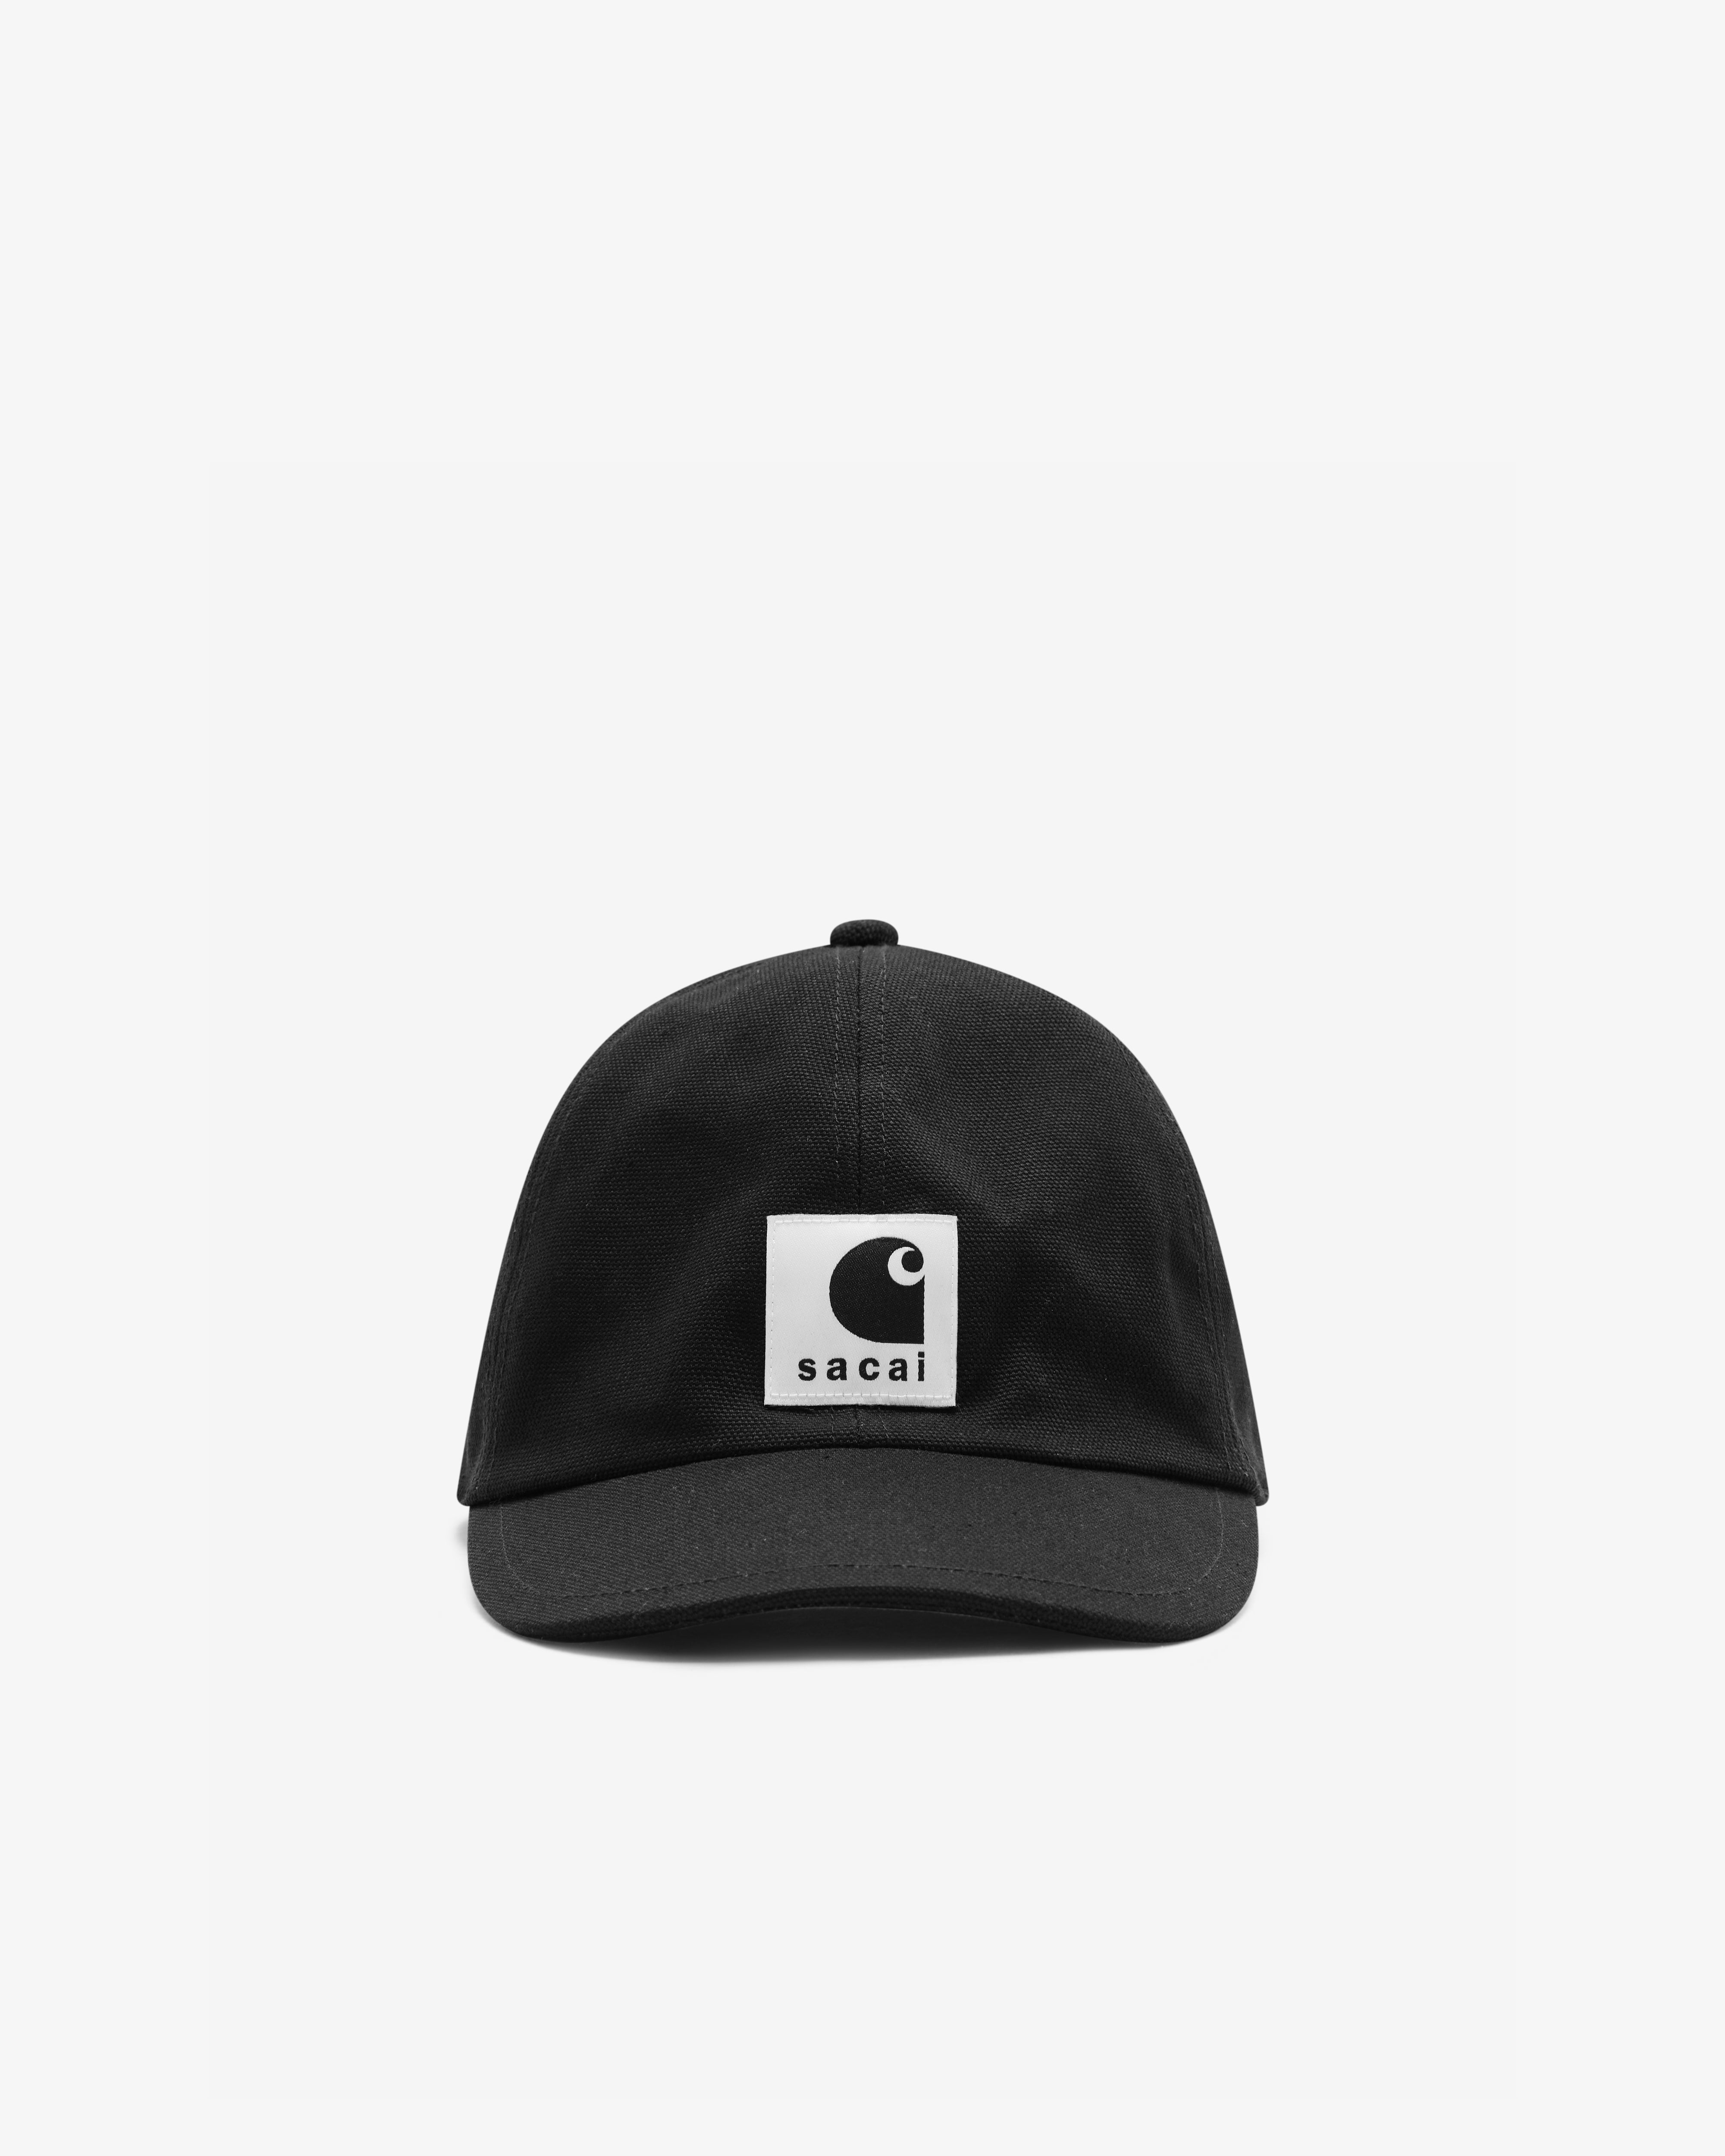 ssacai - Carhartt WIP Duck Cap - (Black)| Dover Street Market E 